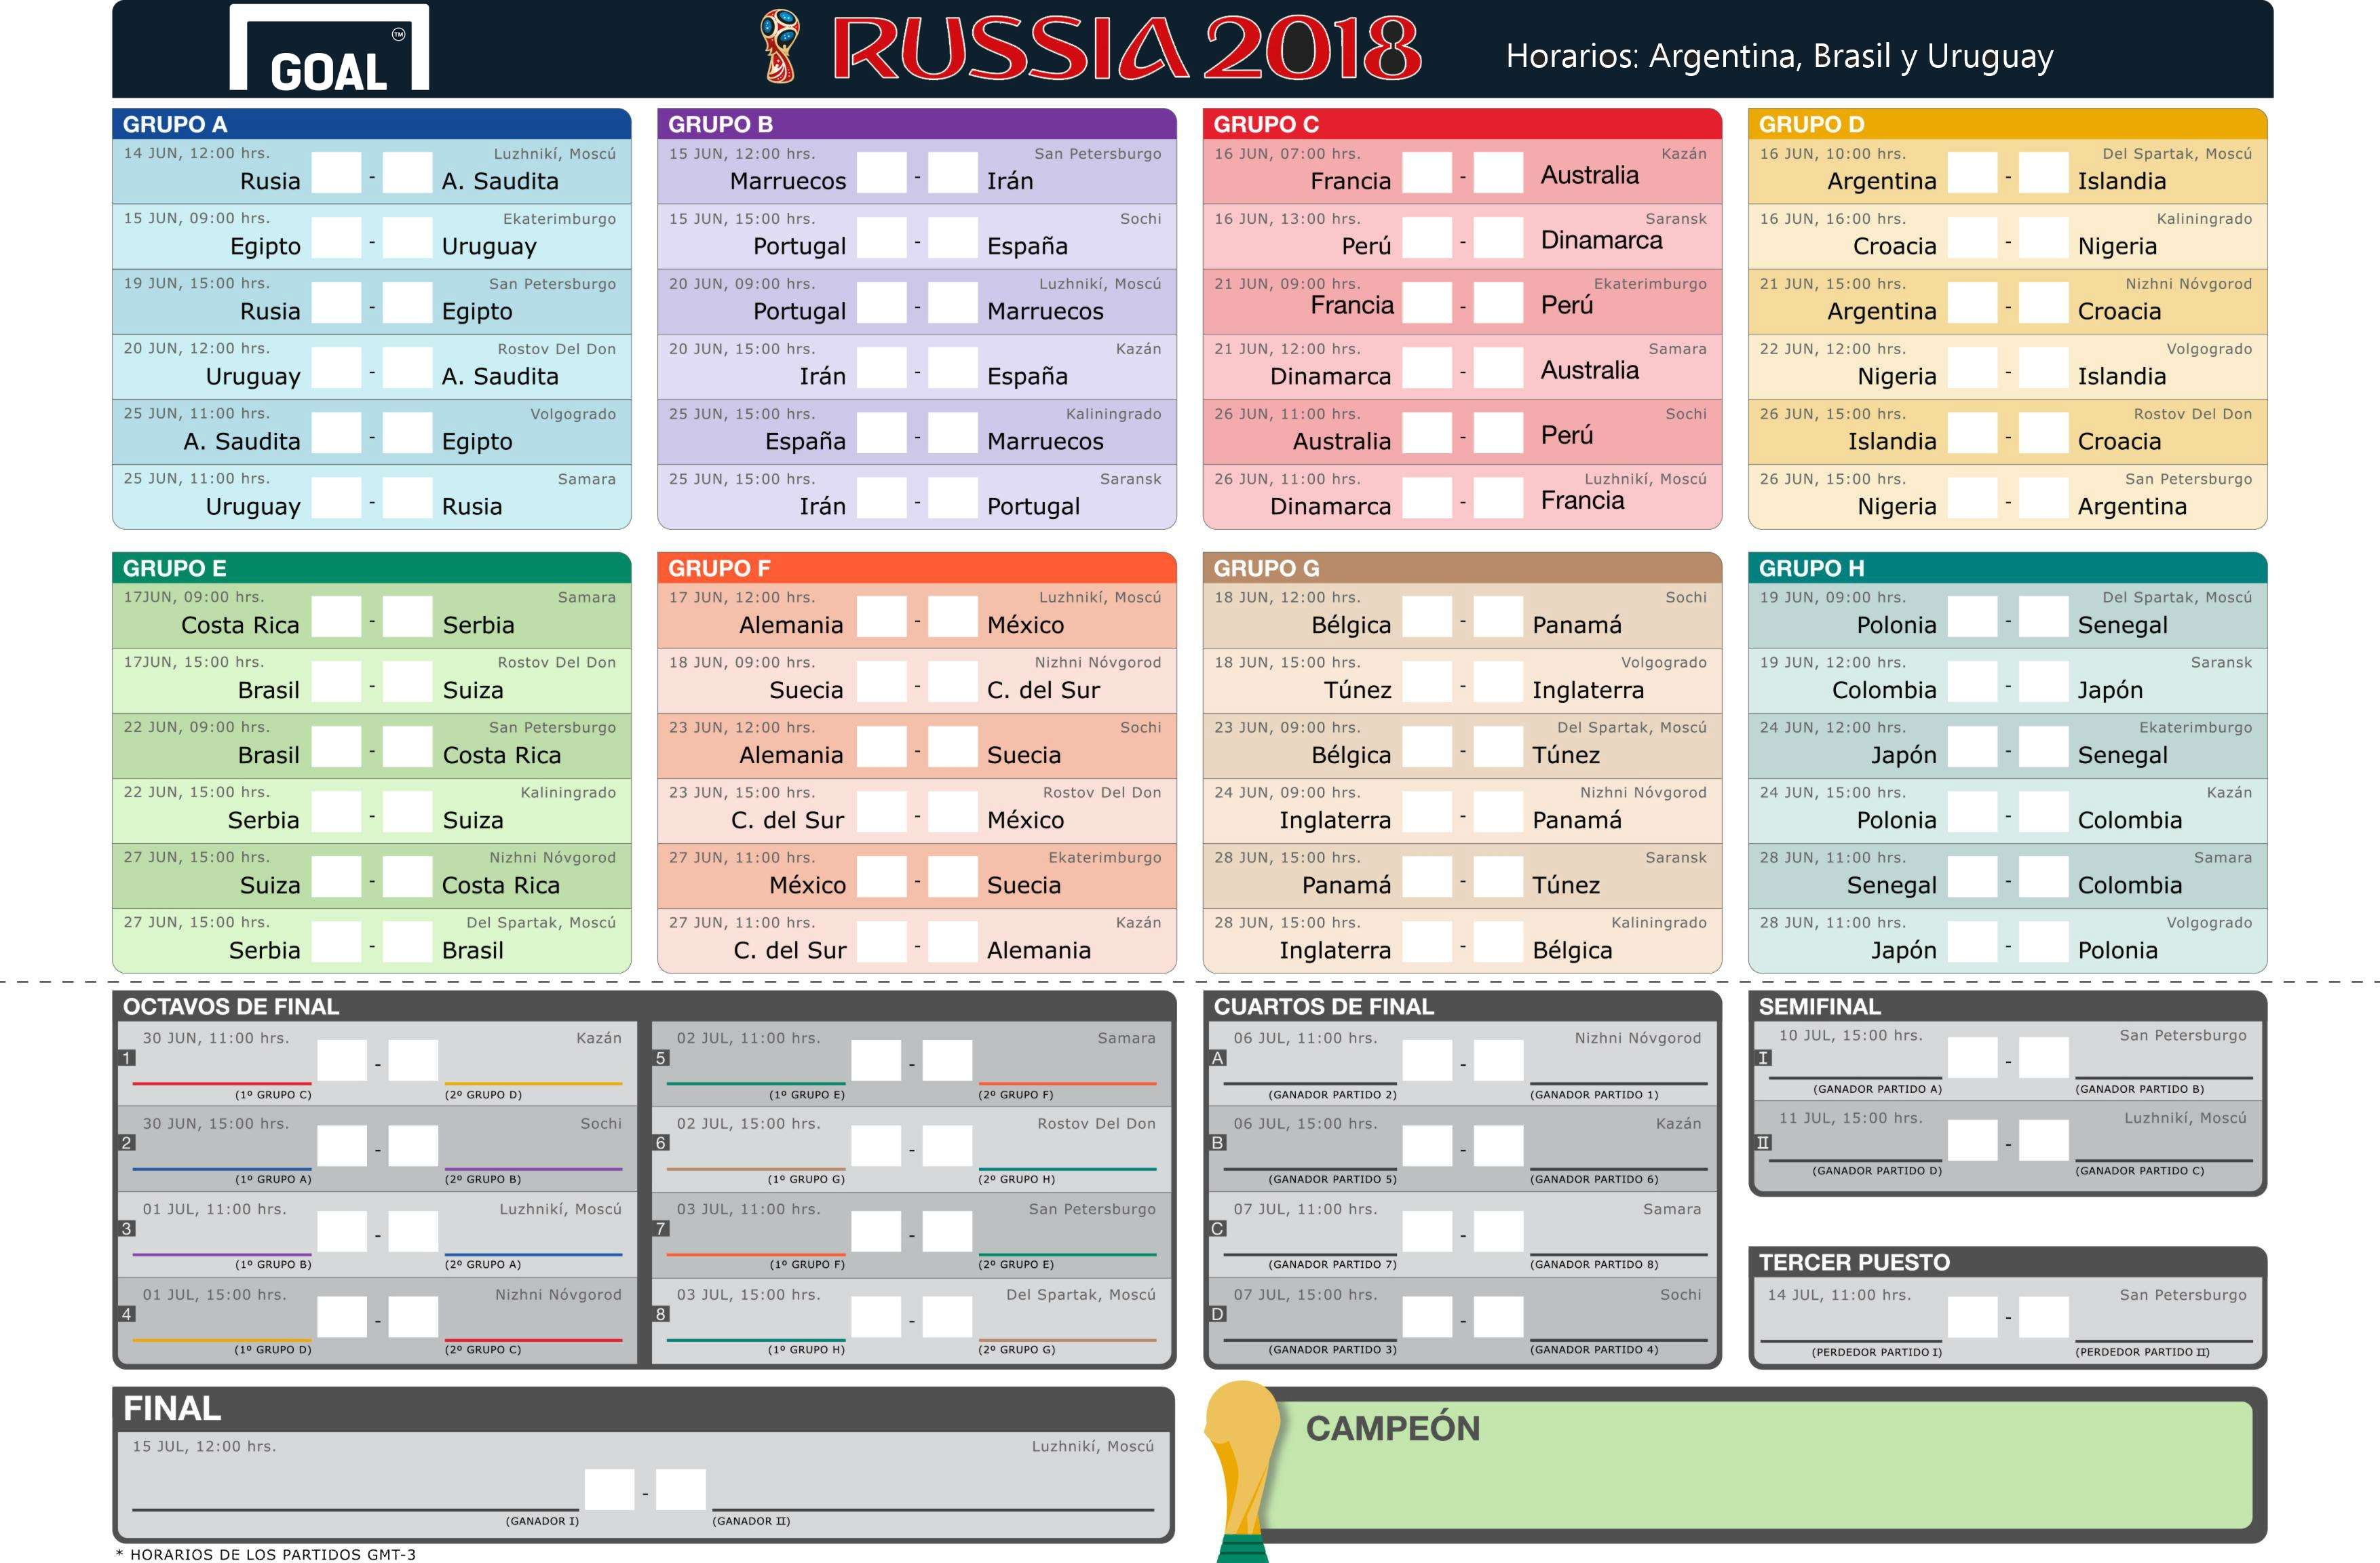 Captura Fixture Rusia 2018 para Argentina